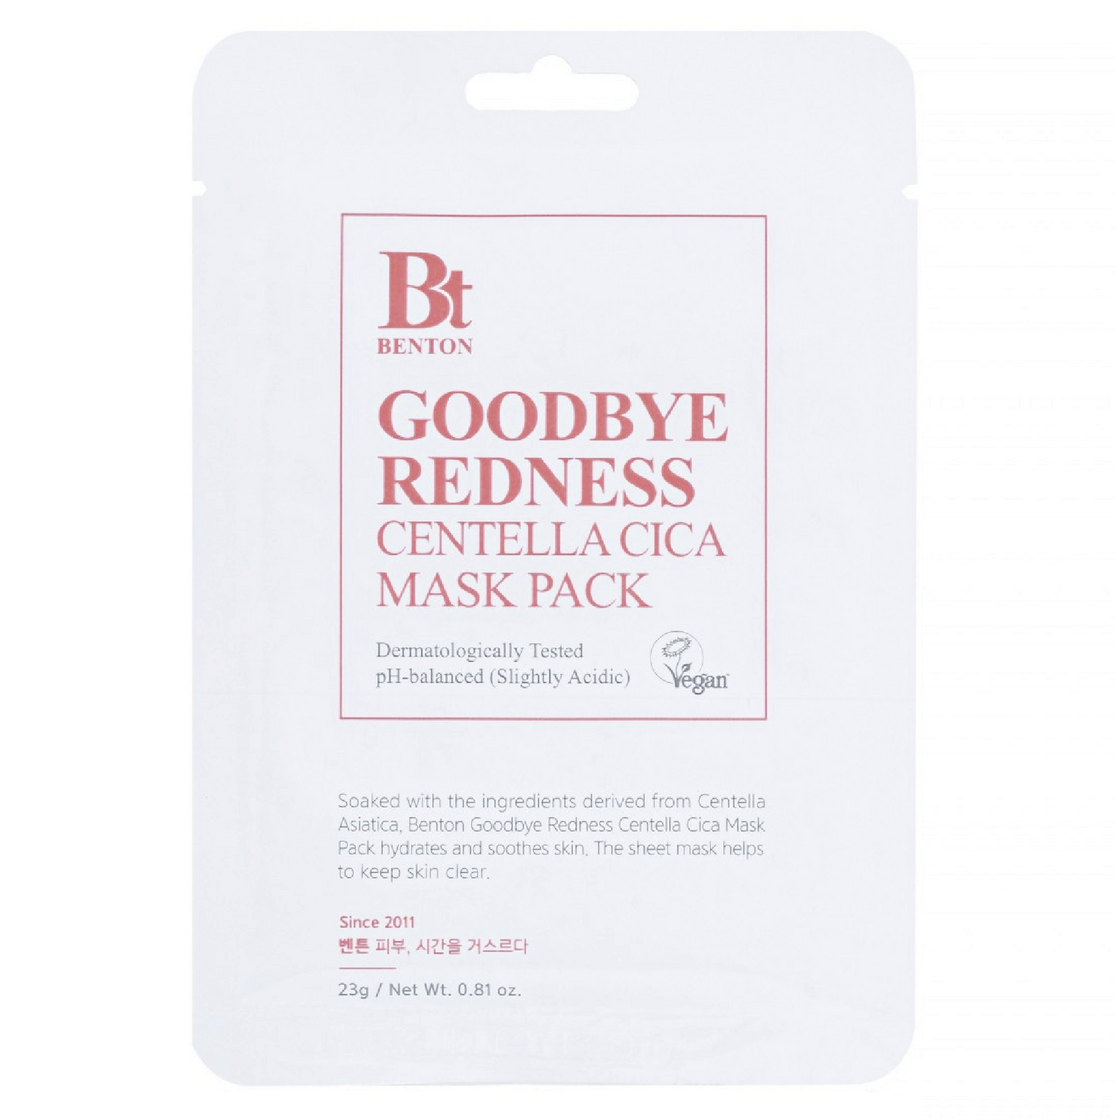 Benton | Goodbye Redness Centella Cica Mask